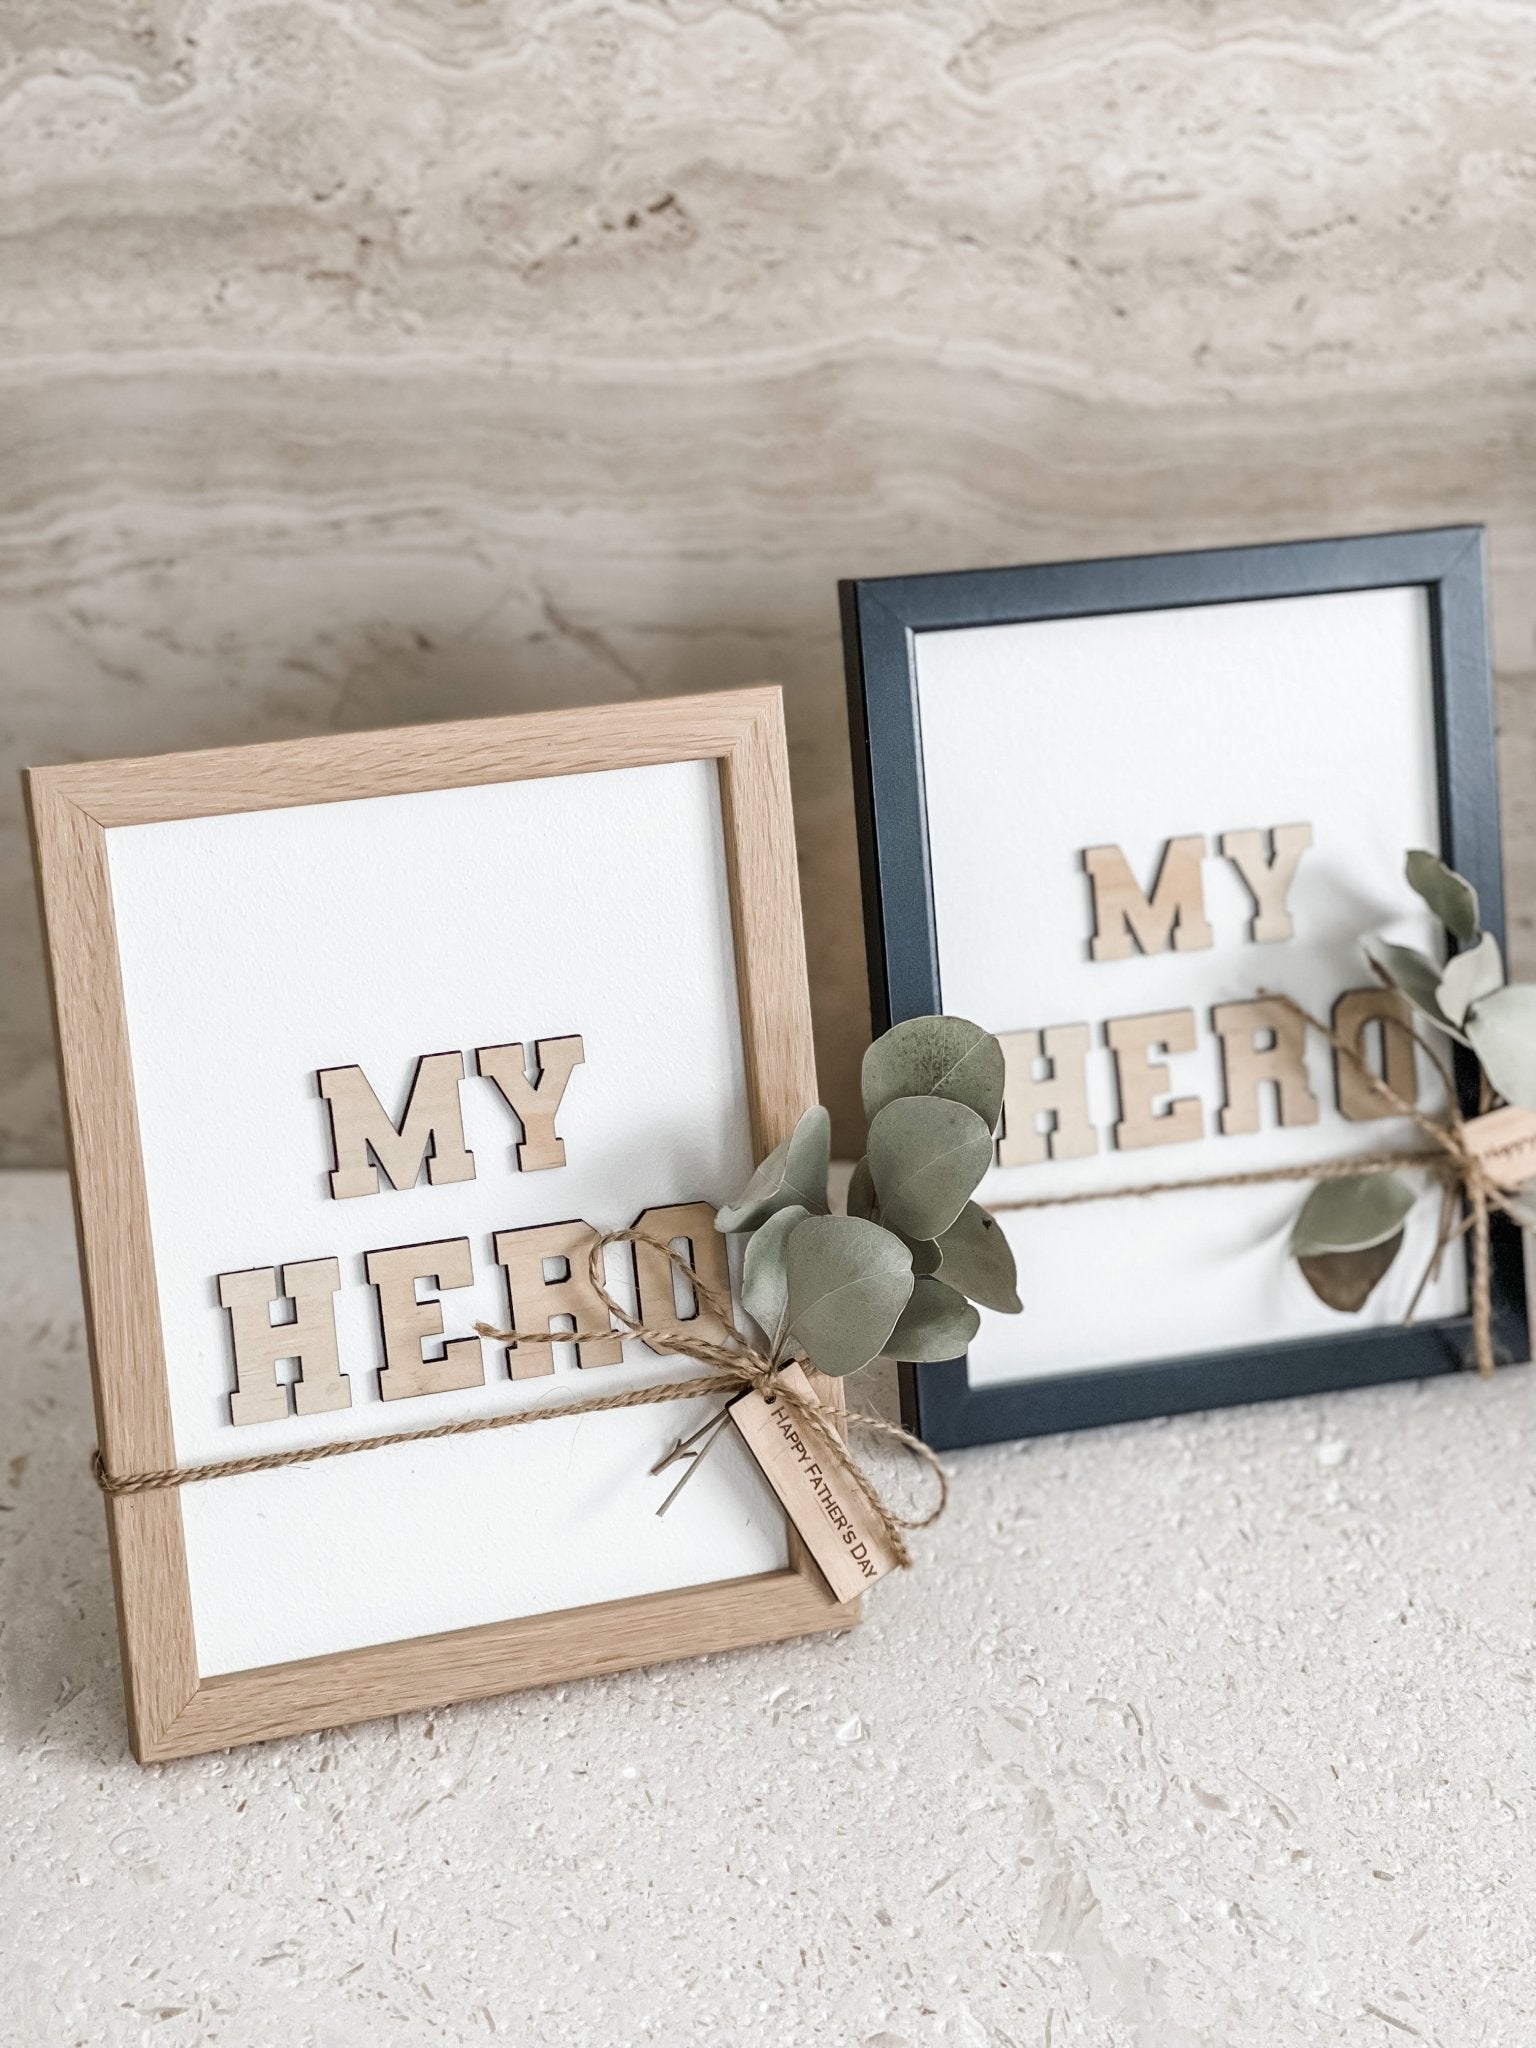 "My Hero" Photo Frame - The Humble Gift Co.